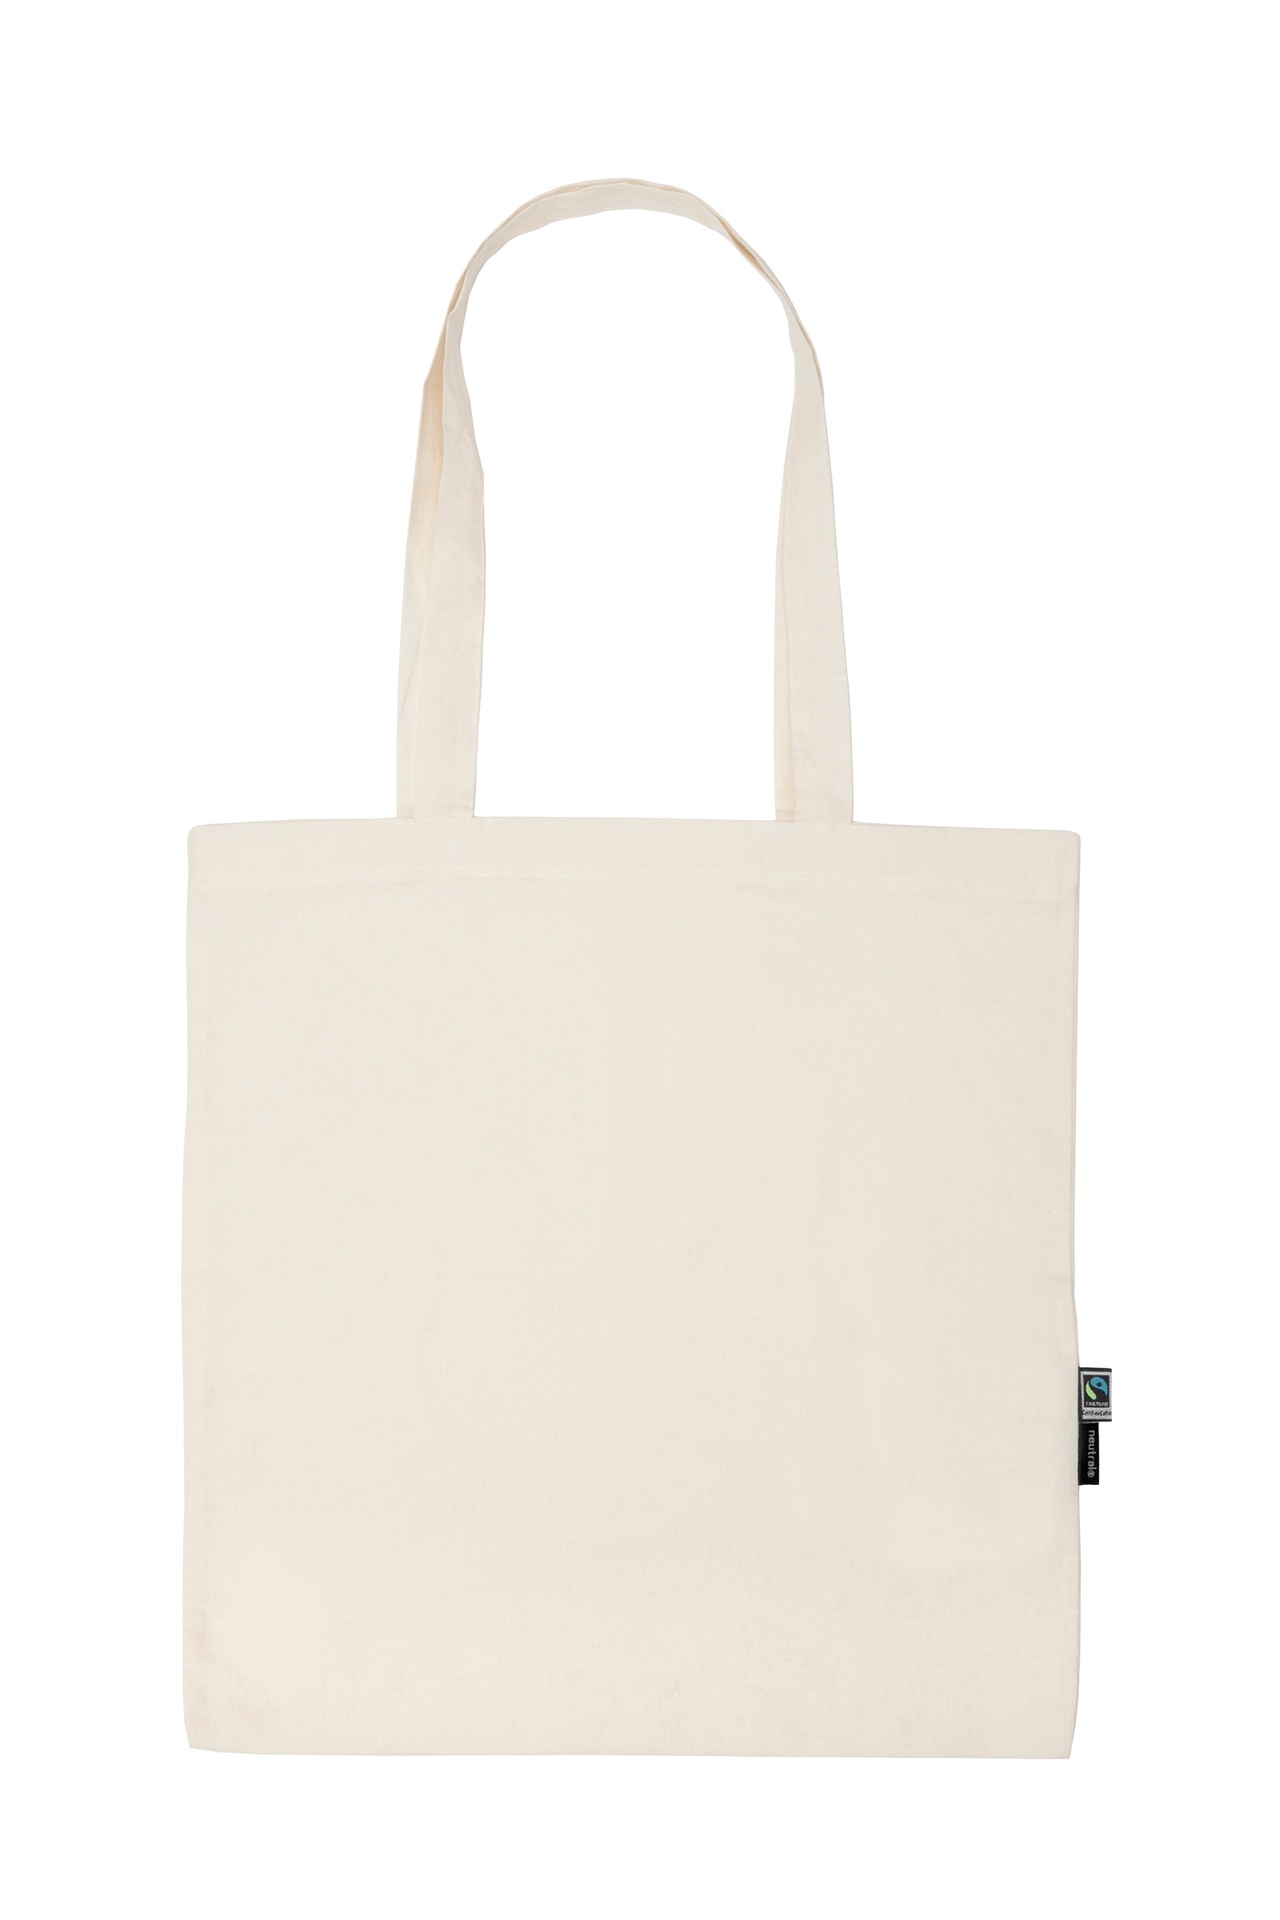 [PR/05815] Shopping Bag W. Long Handles (Nature 00)